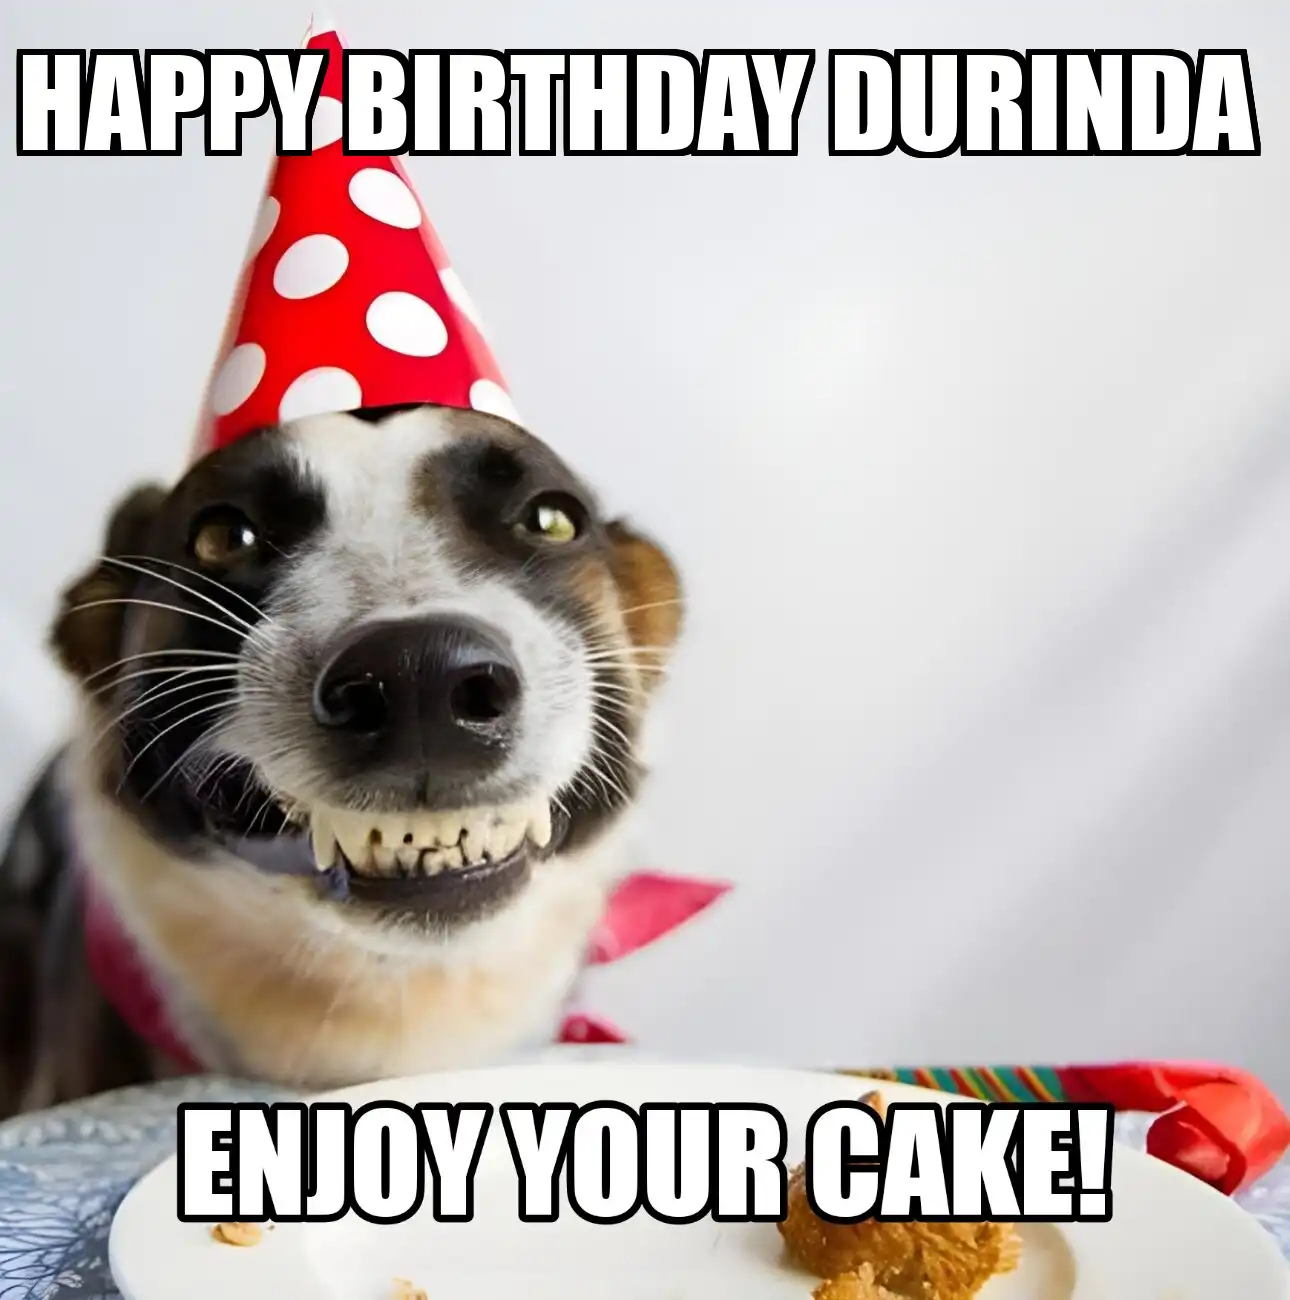 Happy Birthday Durinda Enjoy Your Cake Dog Meme